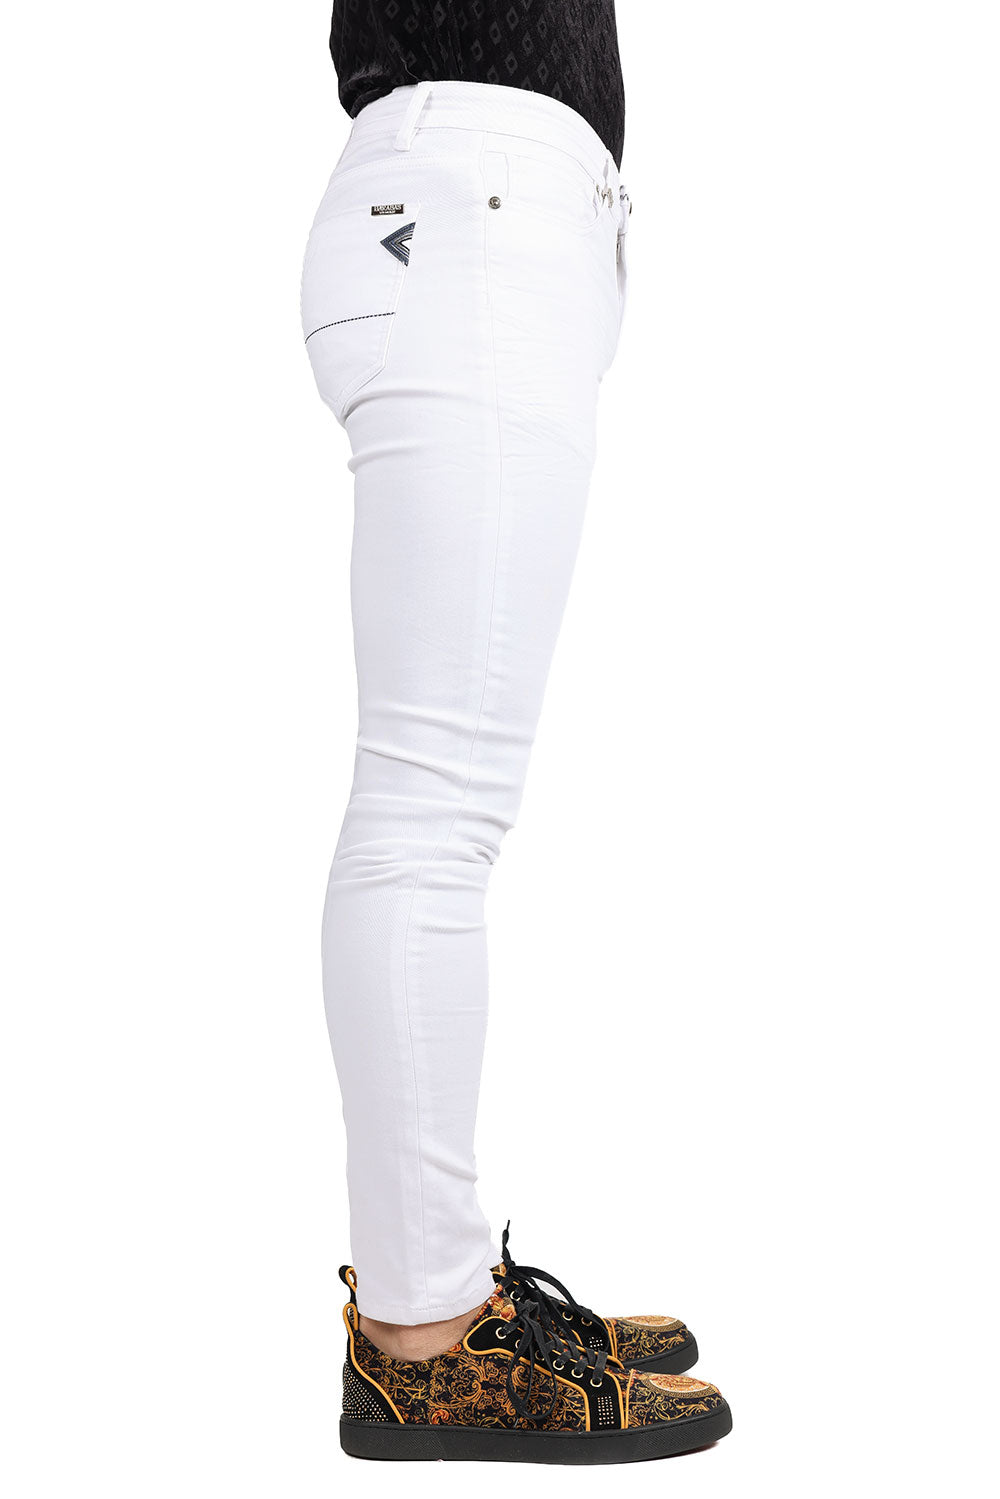 Barabas Men's Black White Navy 5 Pockets Solid Color Prints Jeans 1700 White